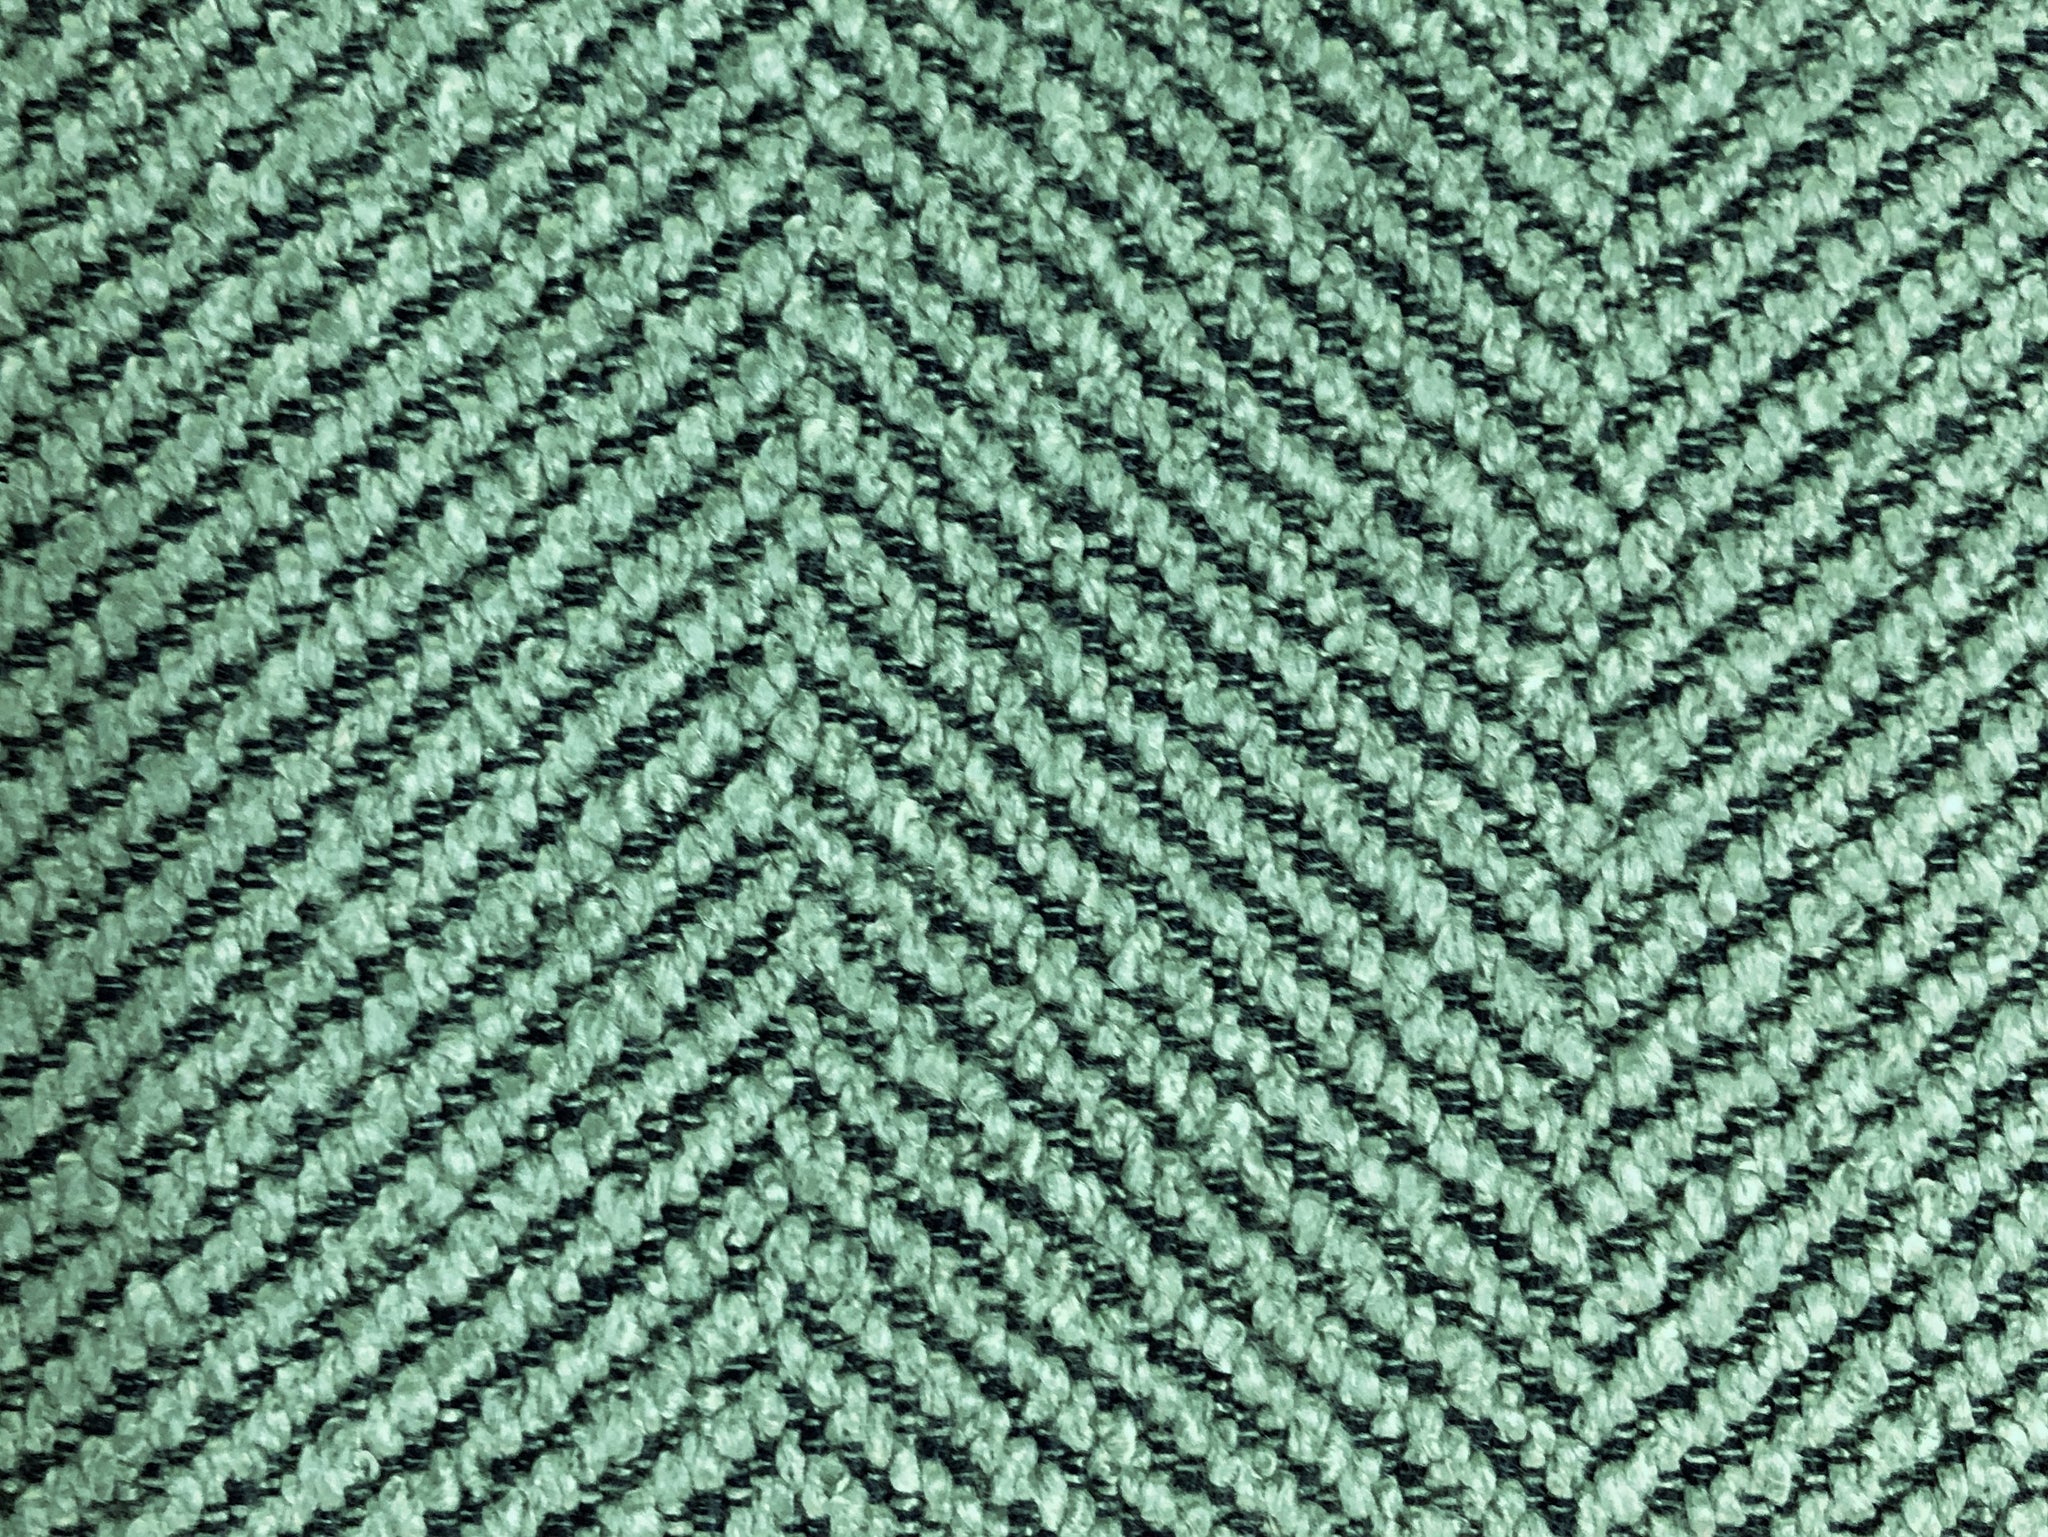 Burch Fabrics Option Olive Green Upholstery Fabric – Toto Fabrics